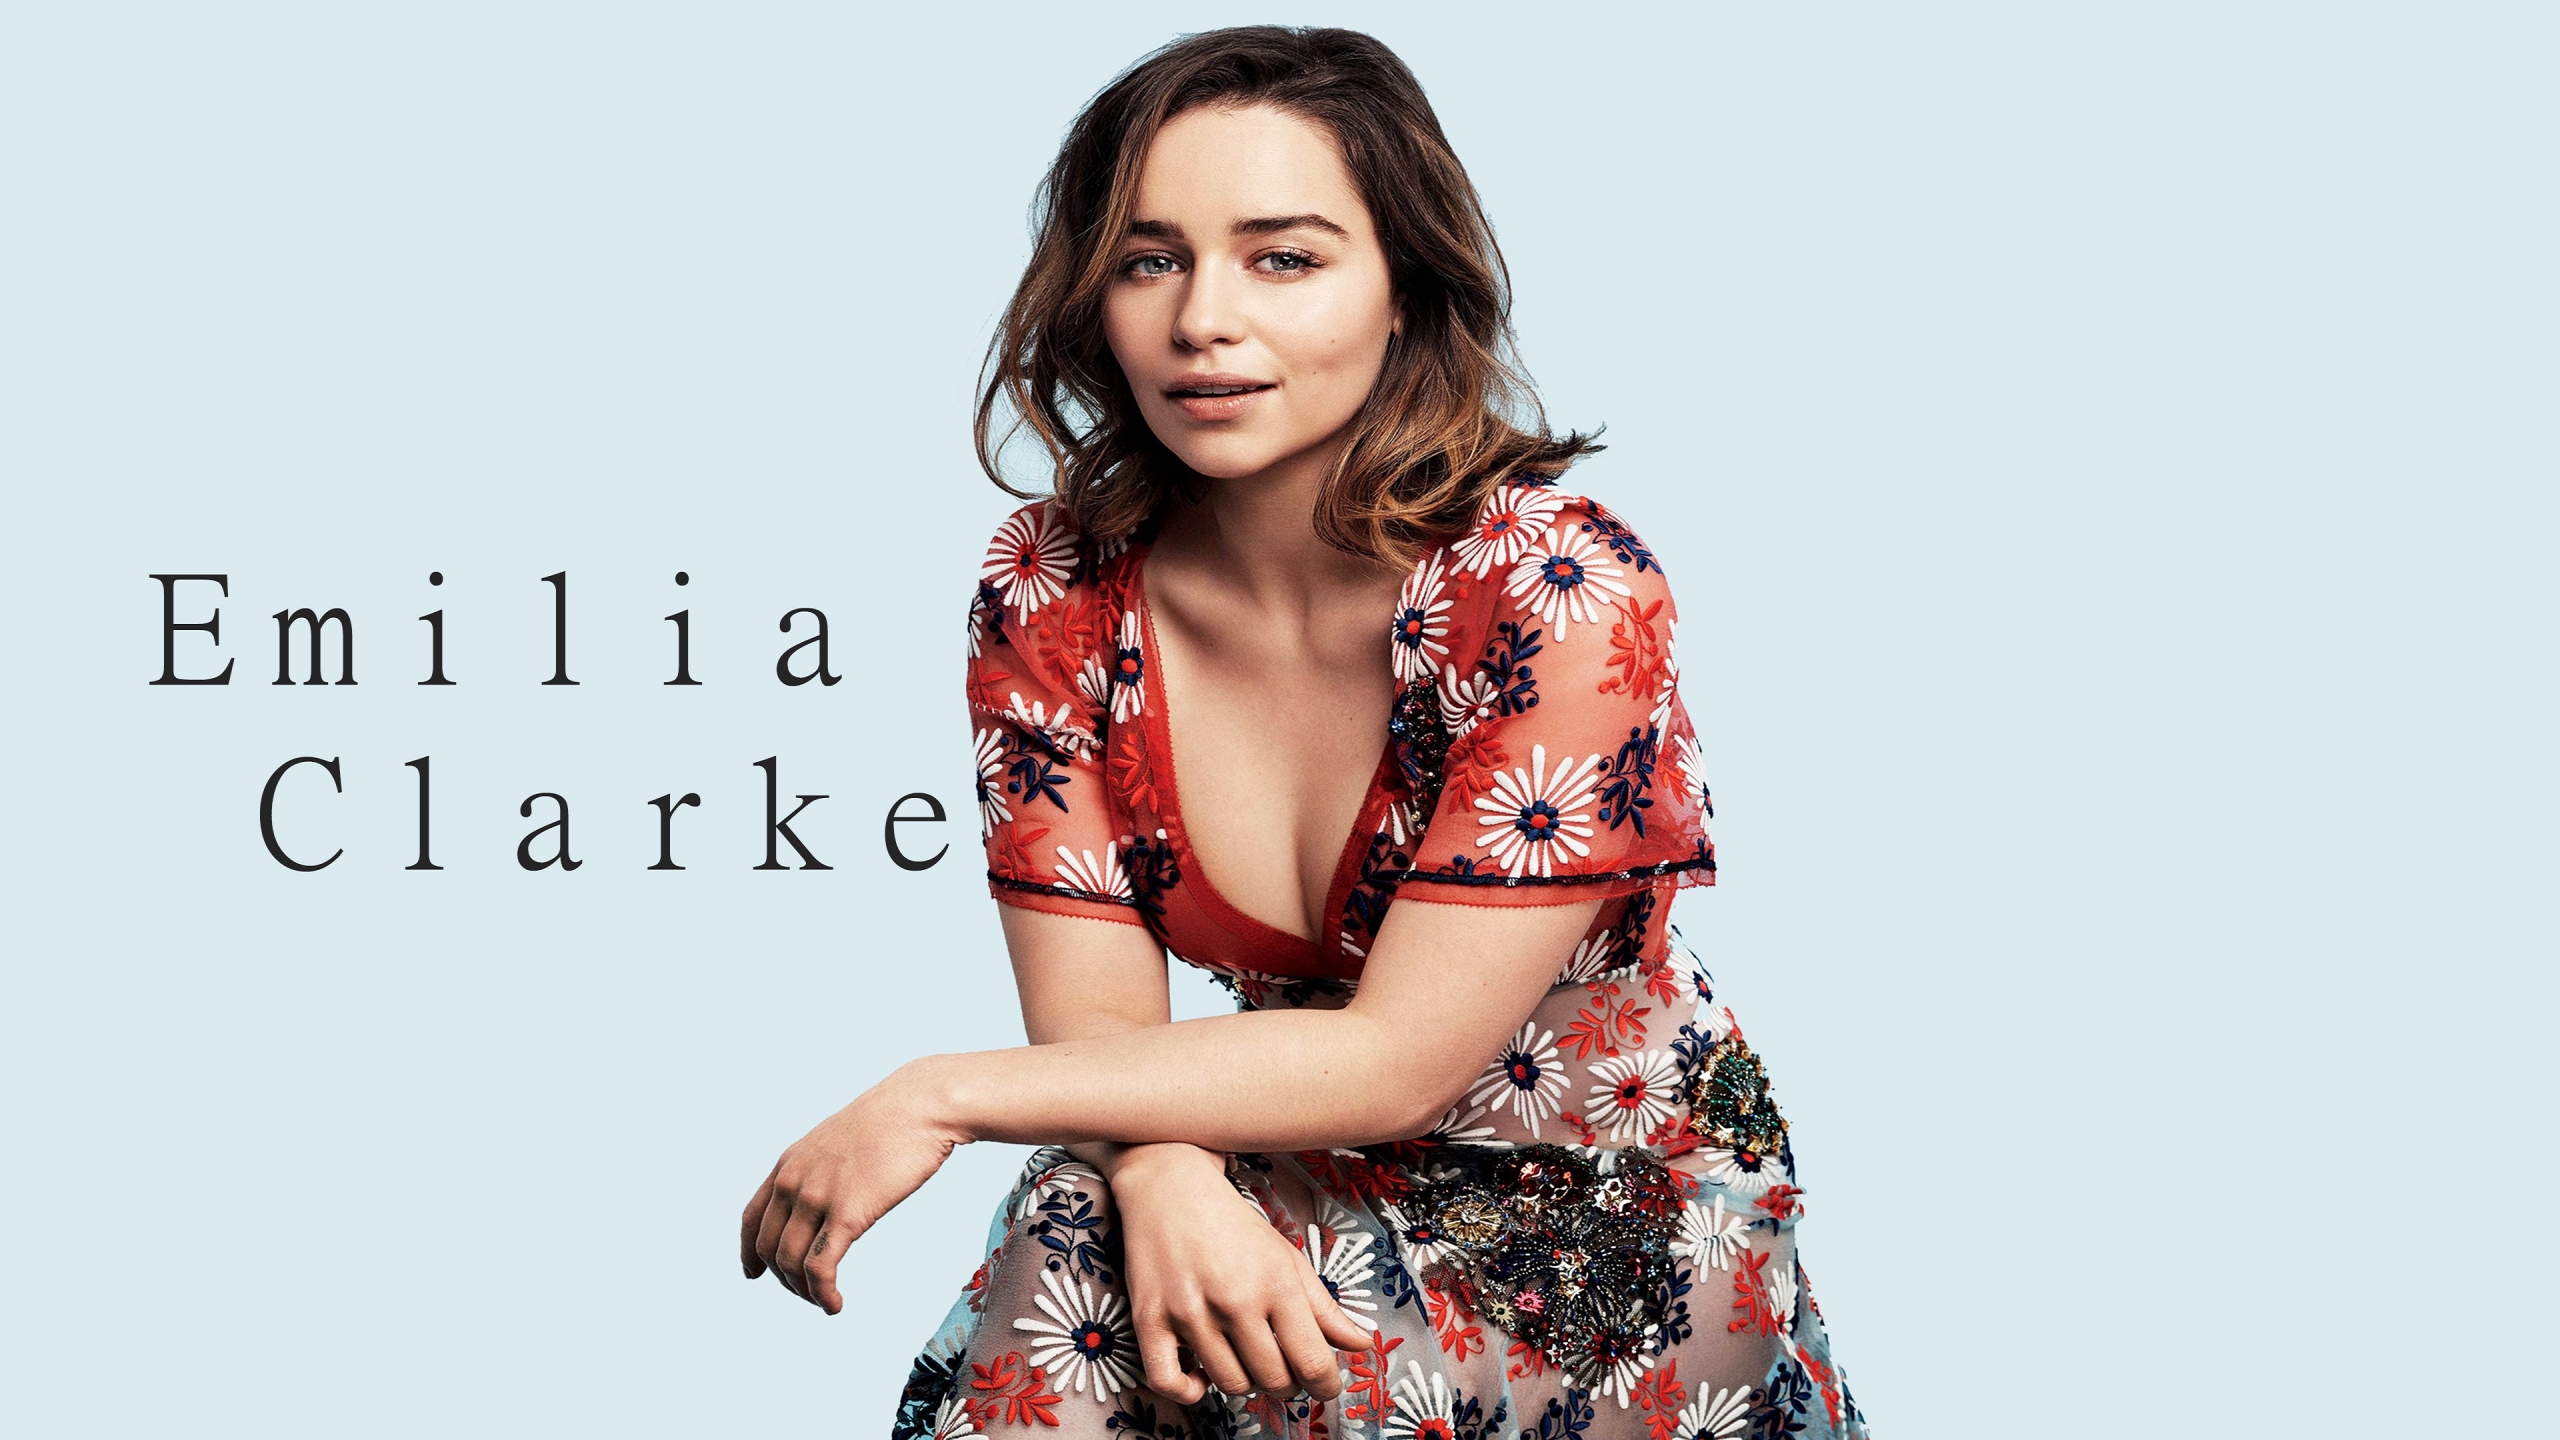 Emilia Clarke 2017 for 2560 x 1440 HDTV resolution